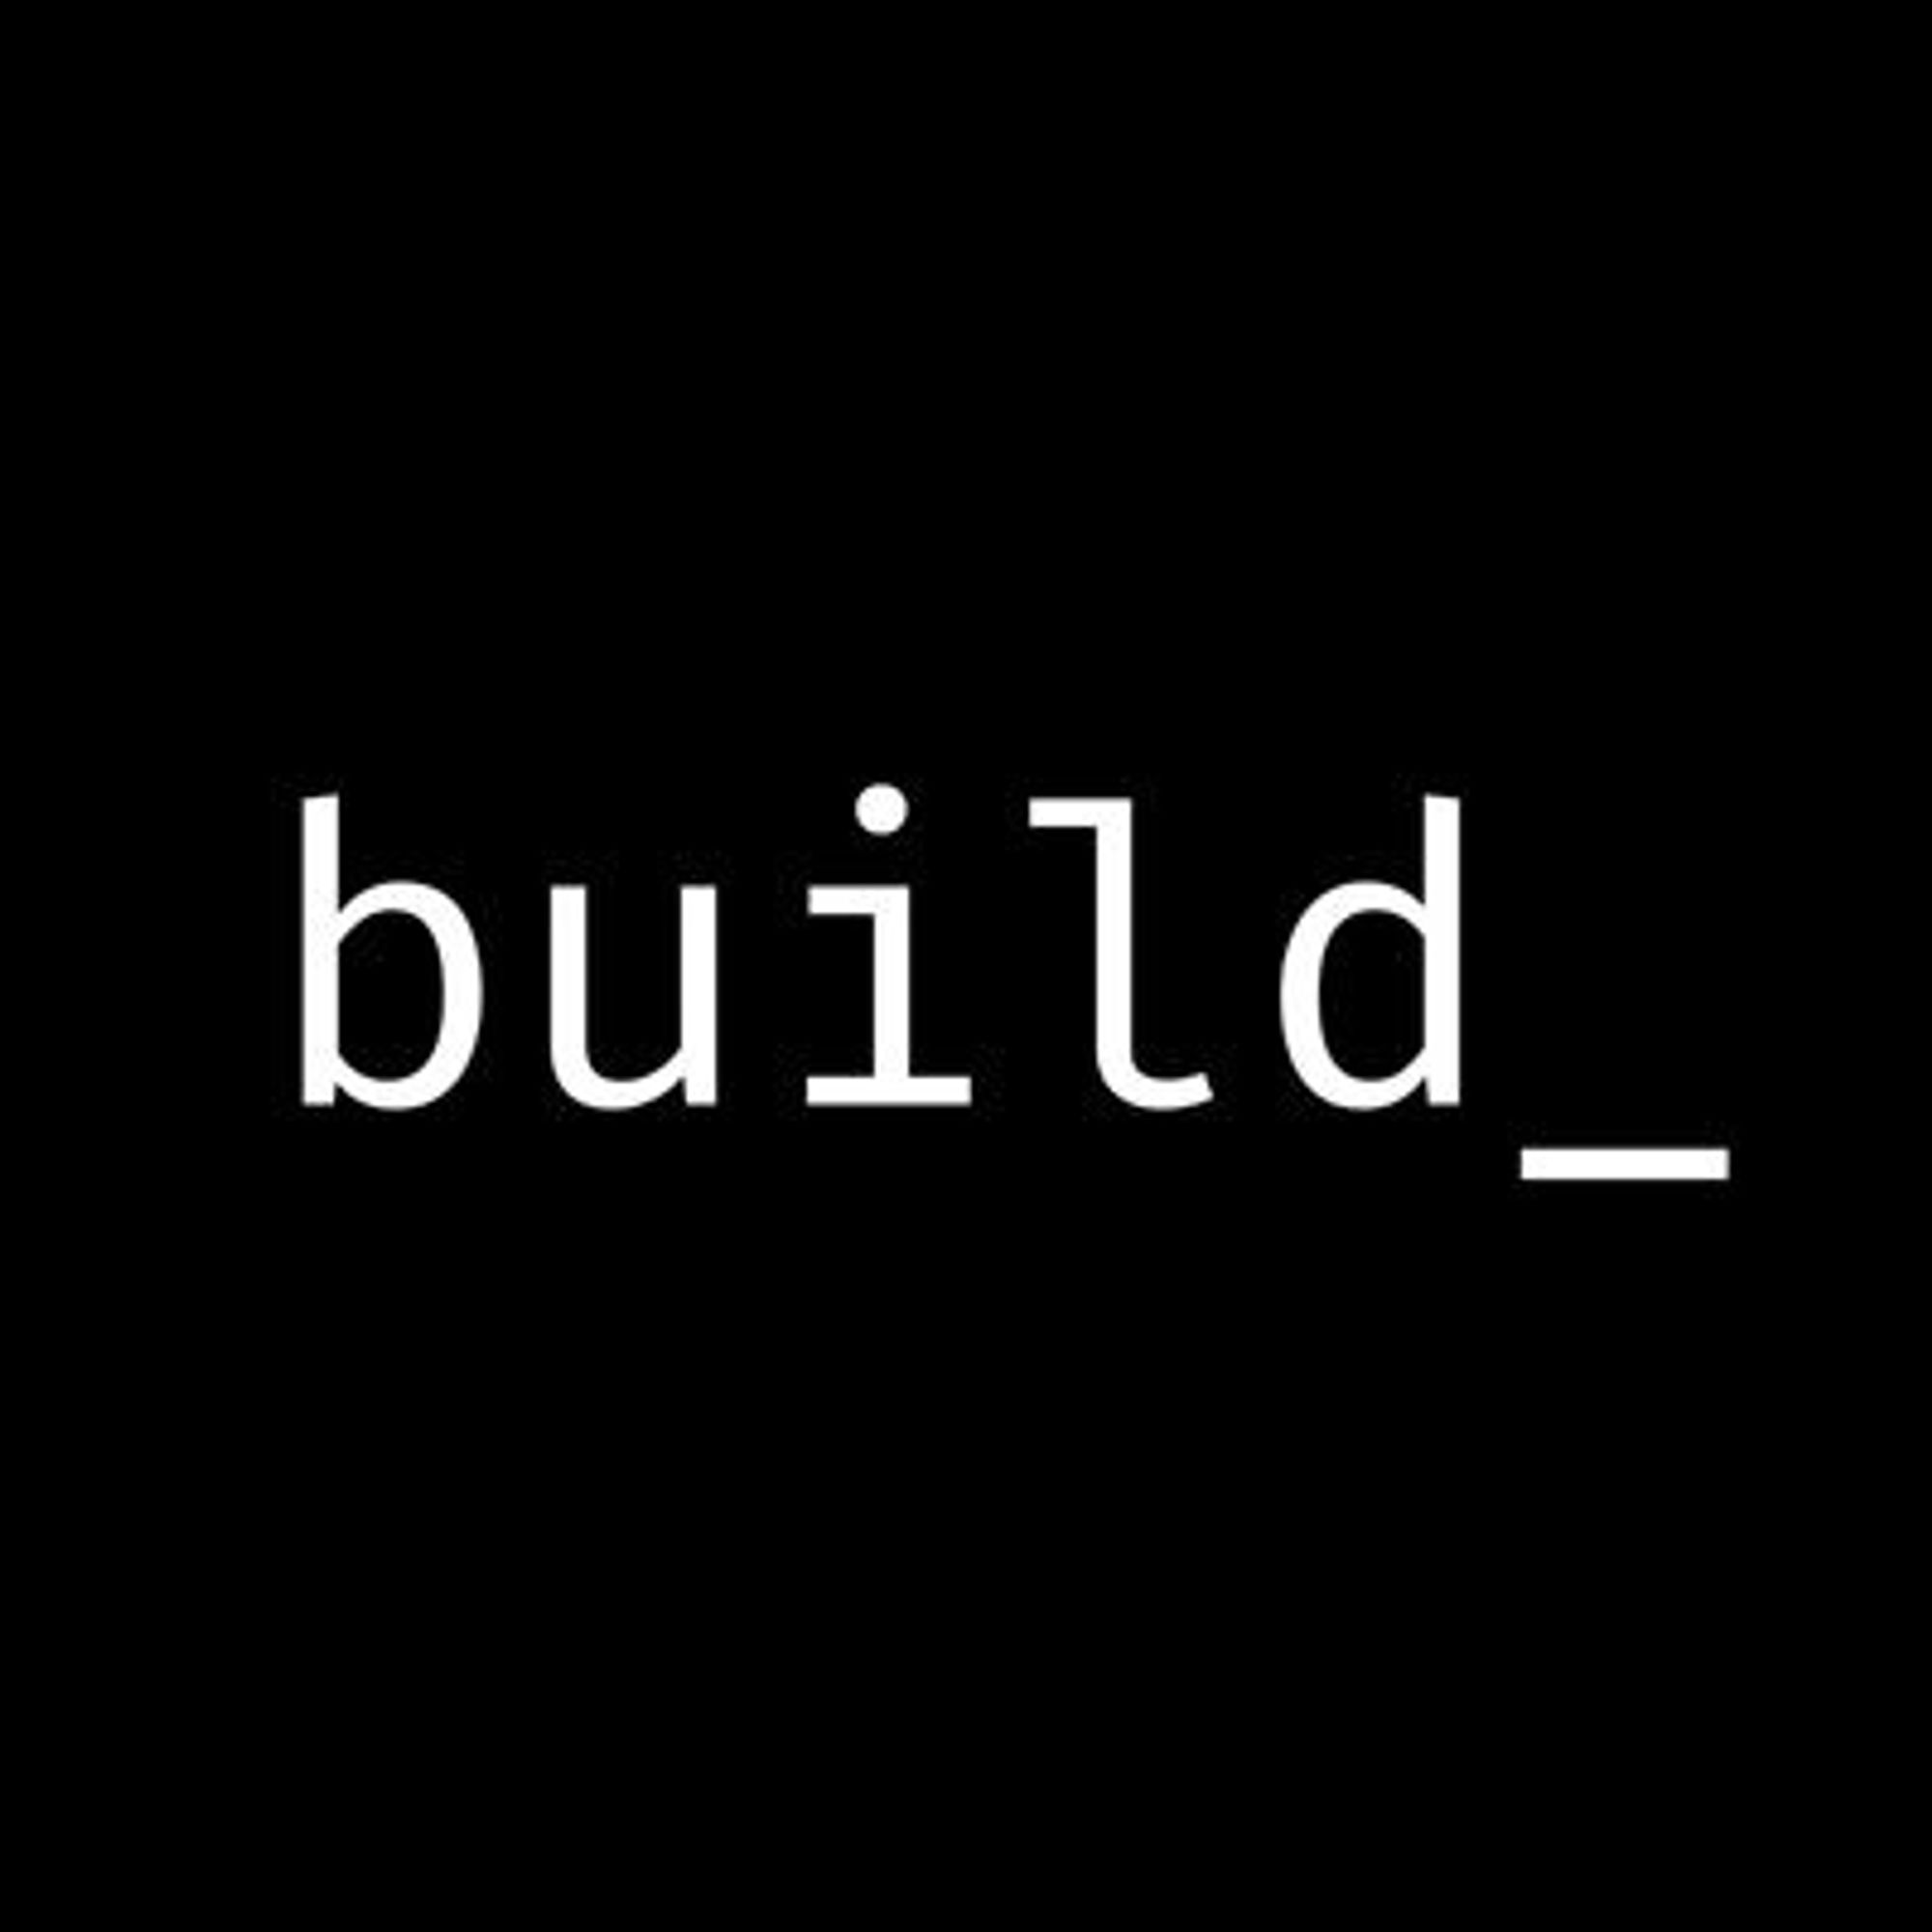 build_